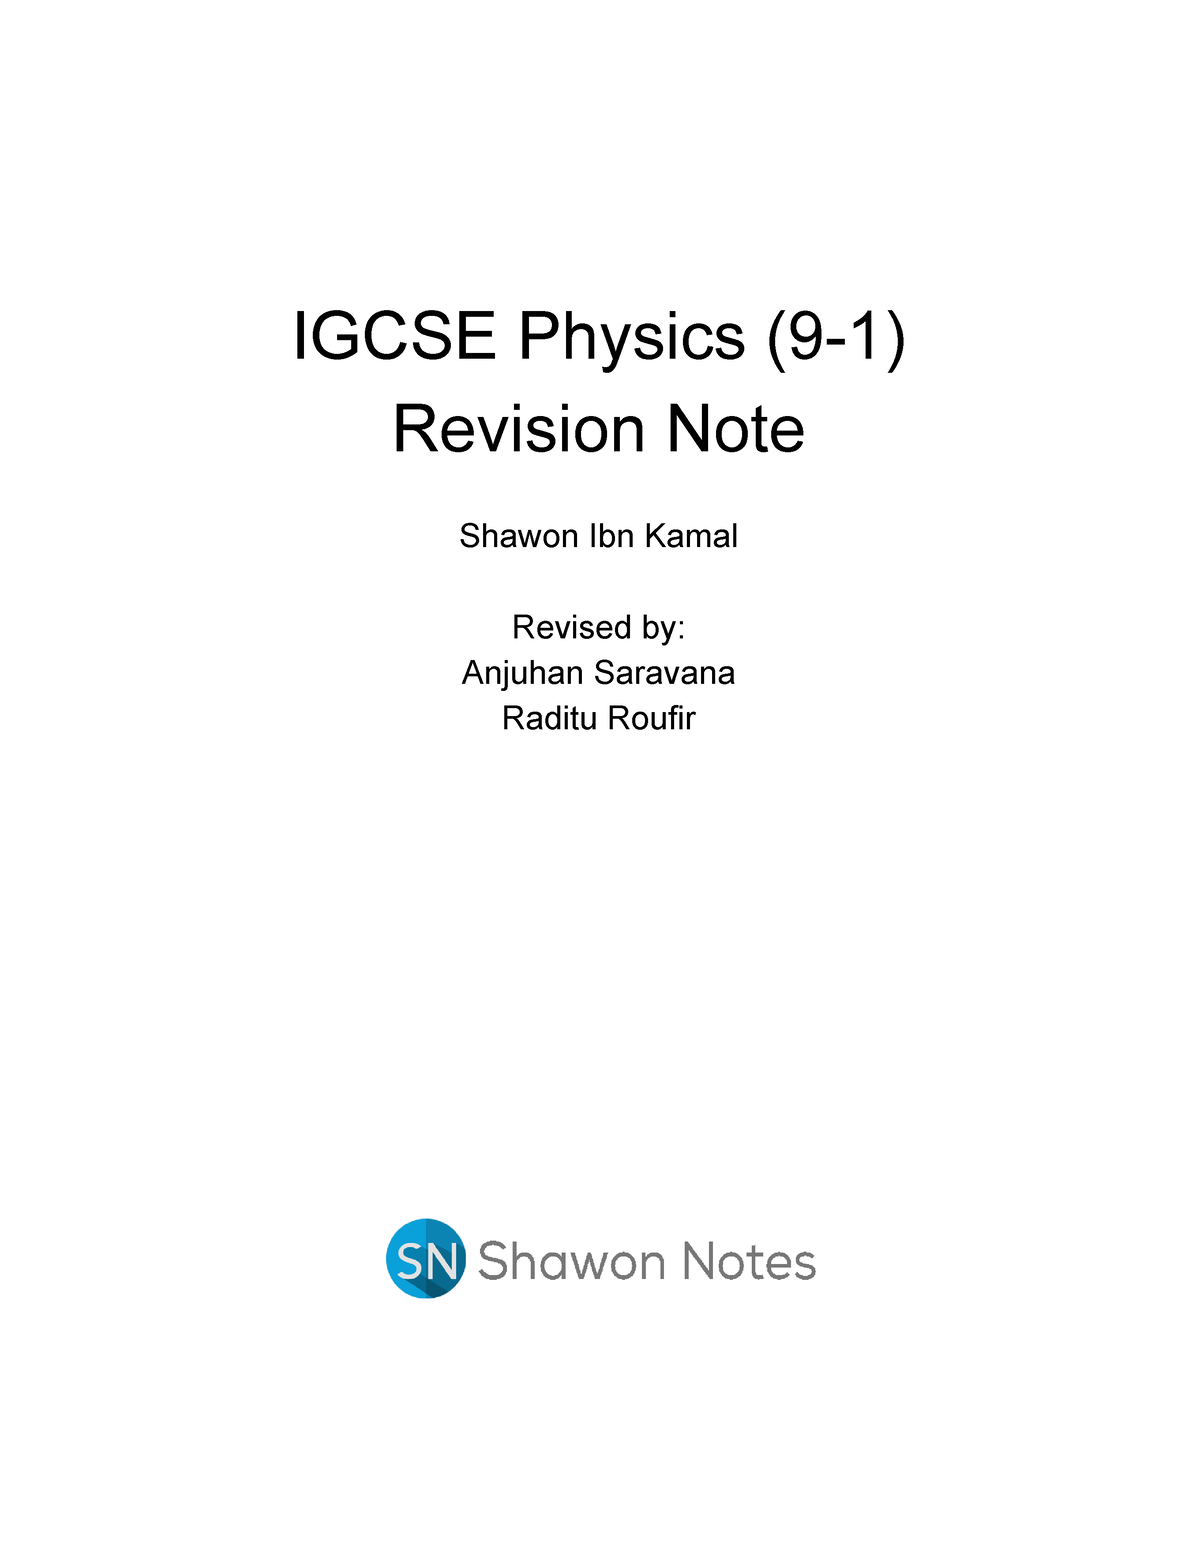 Edexcel Igcse Physics Revision Note IGCSE Physics (91) Revision Note